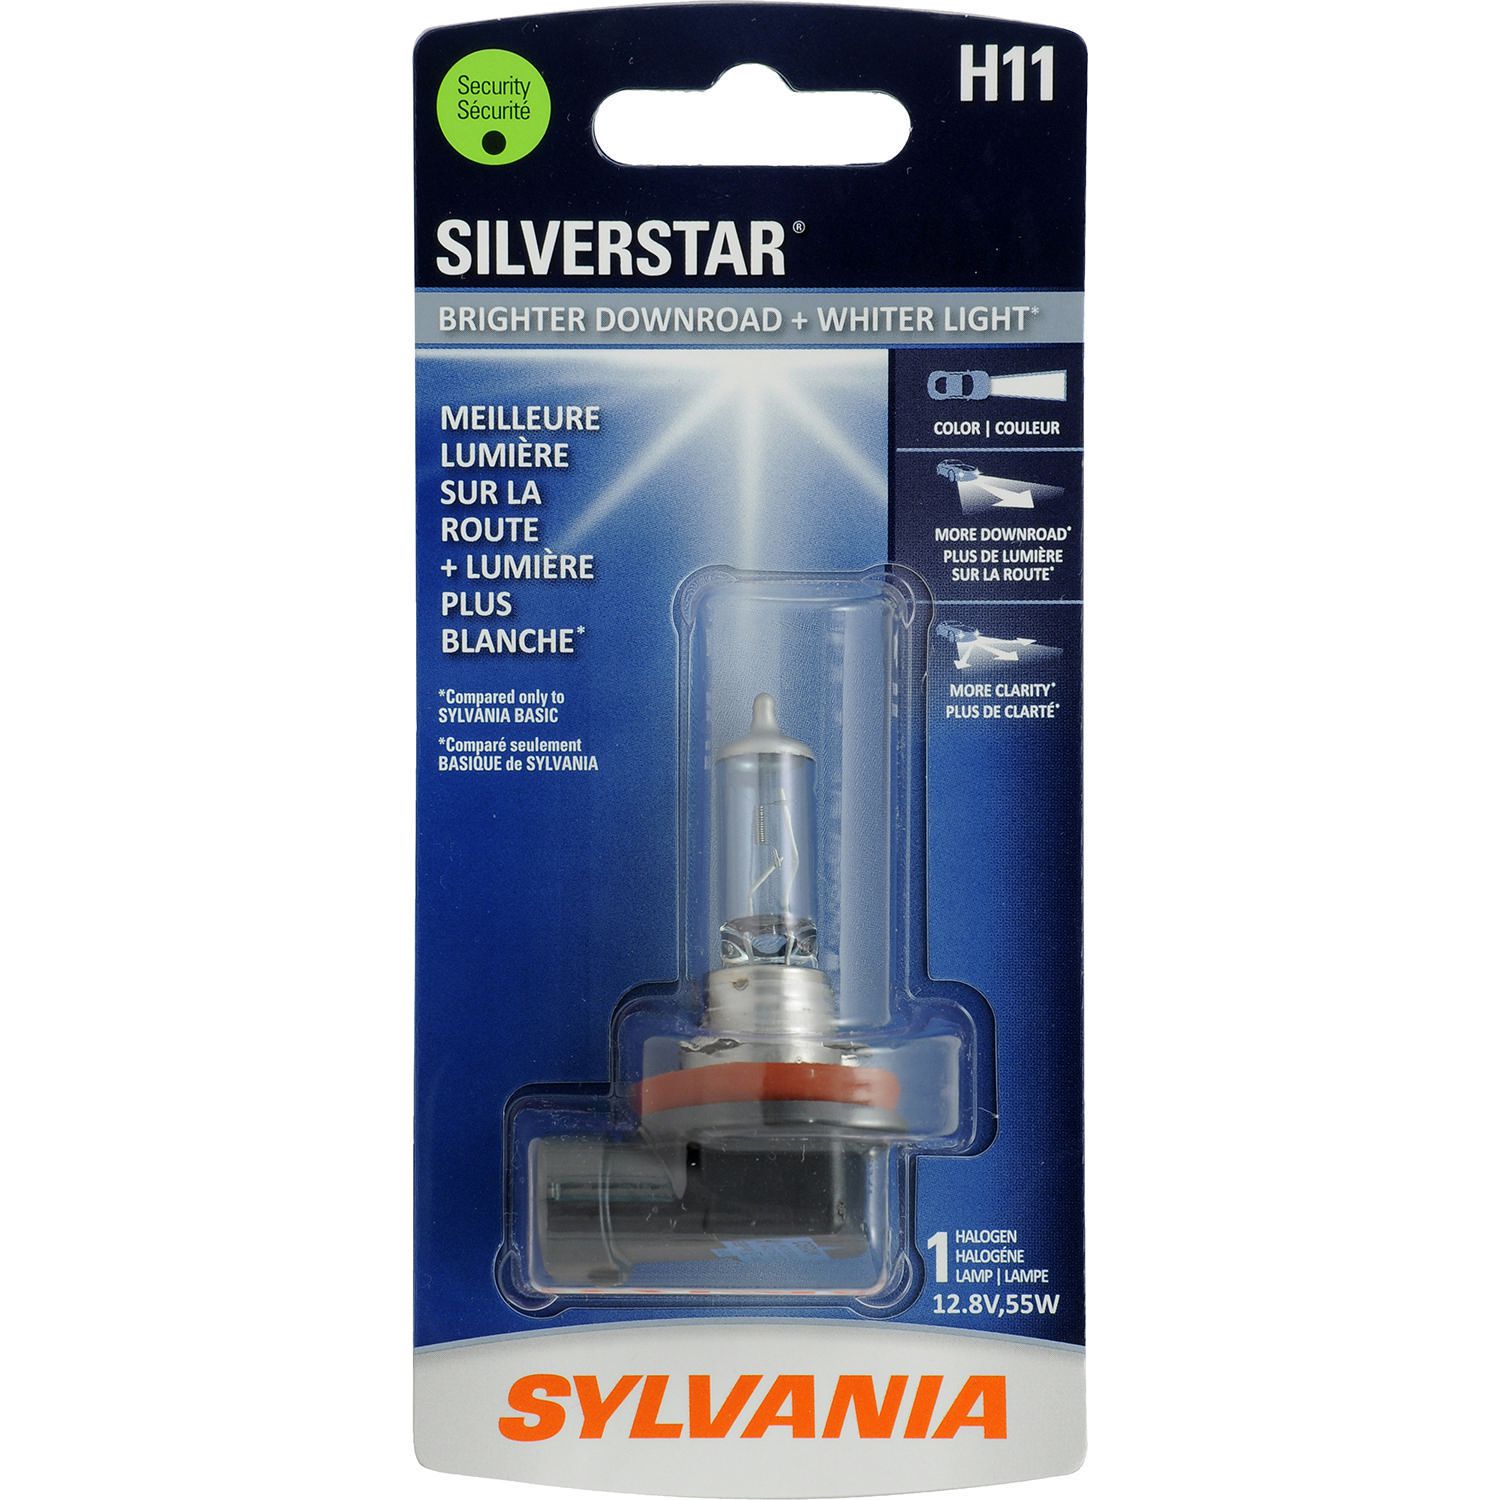 sylvania-h11-silverstar-halogen-headlight-walmart-canada